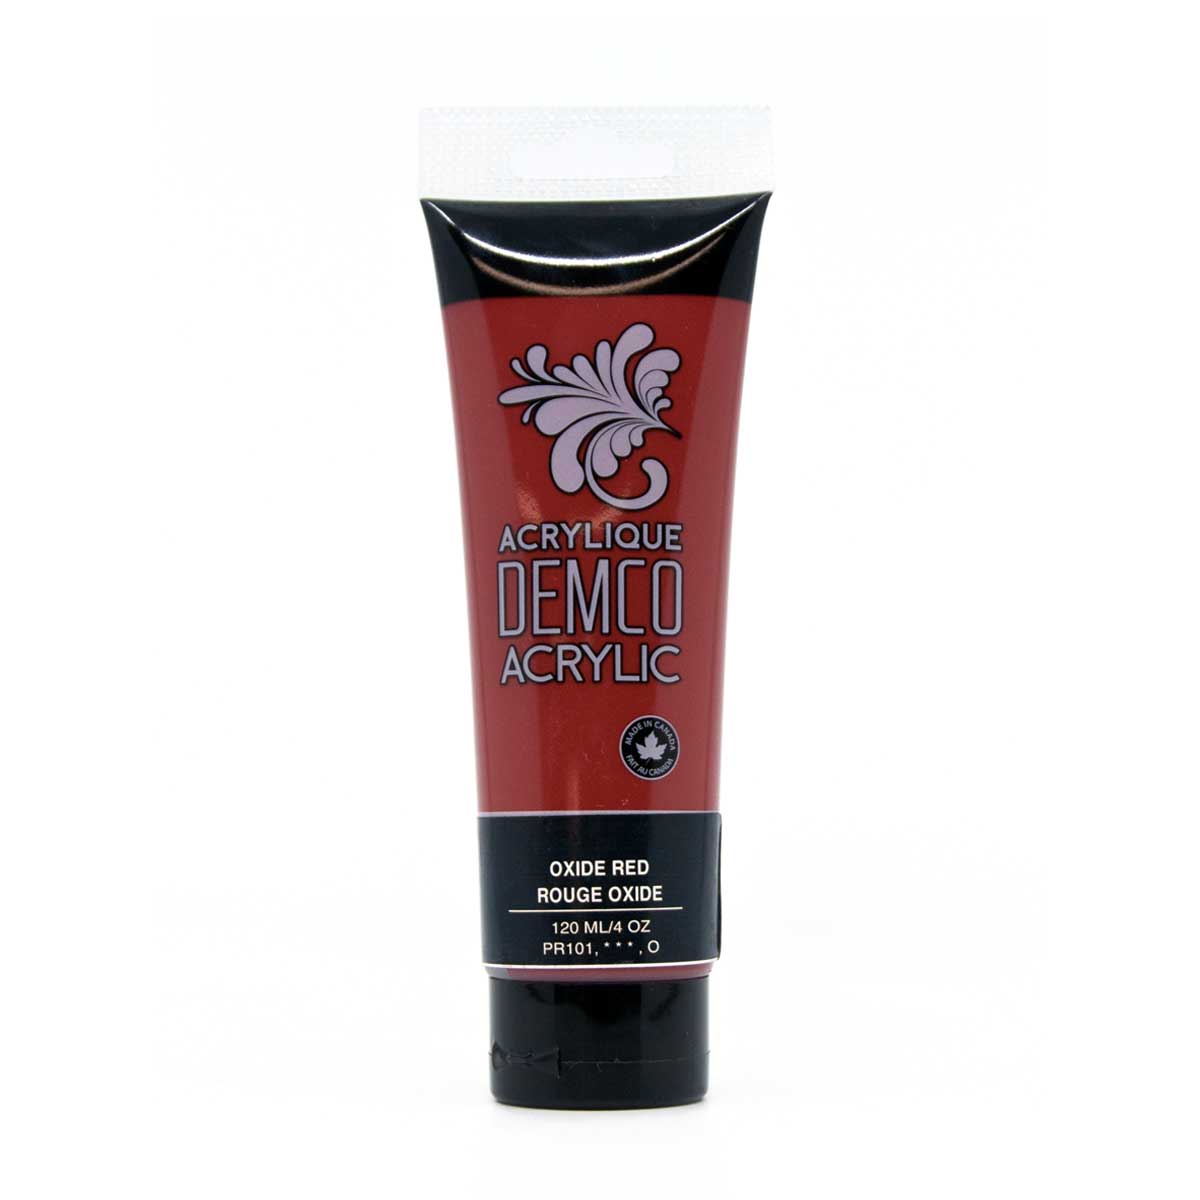 Demco Acrylic Oxide Red 120ml/4oz